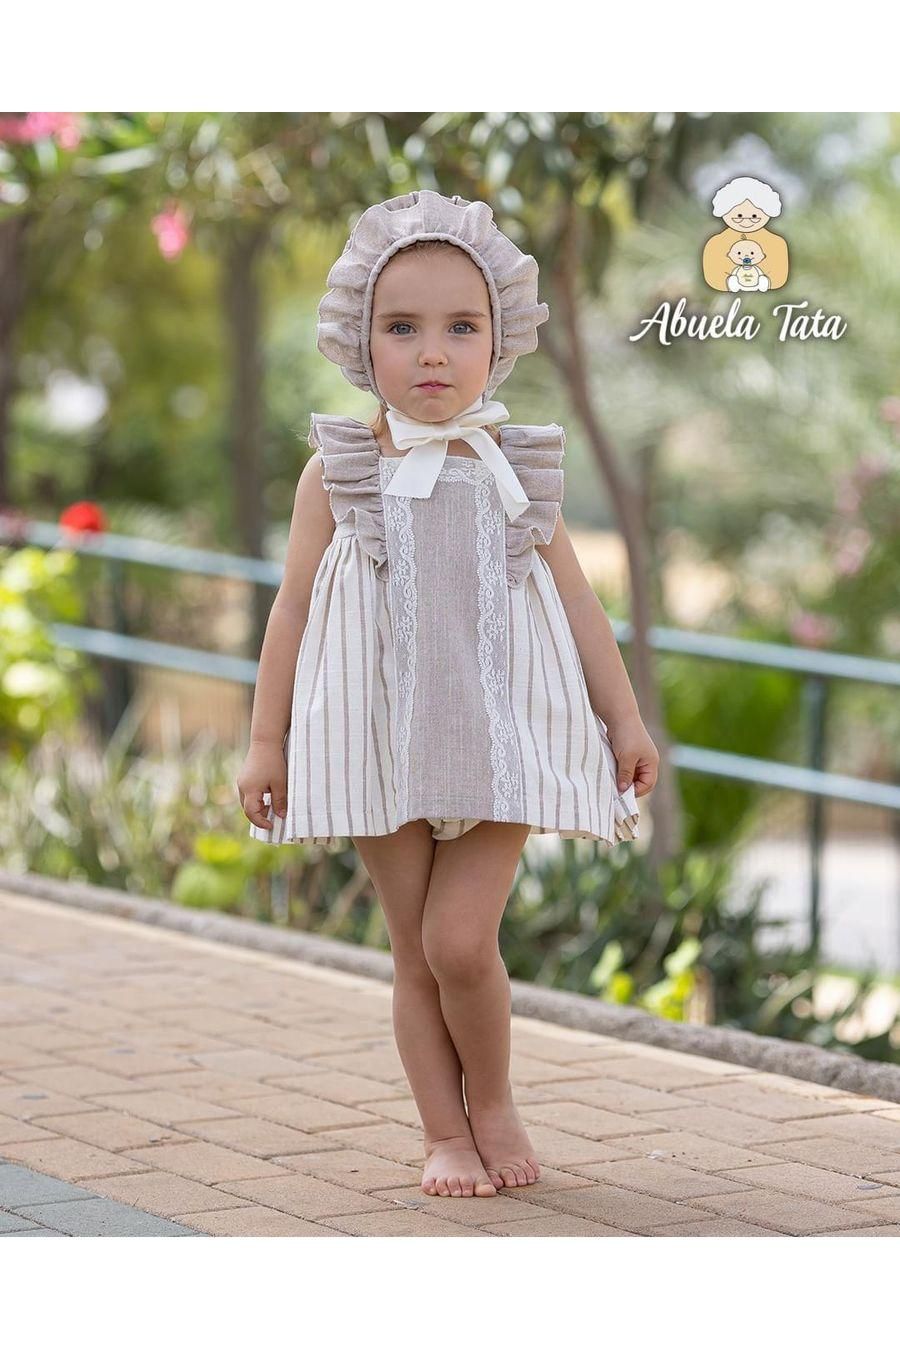 SS Abuela Tata Cream Stripe Baby Girls Dress Dainty Delilah 